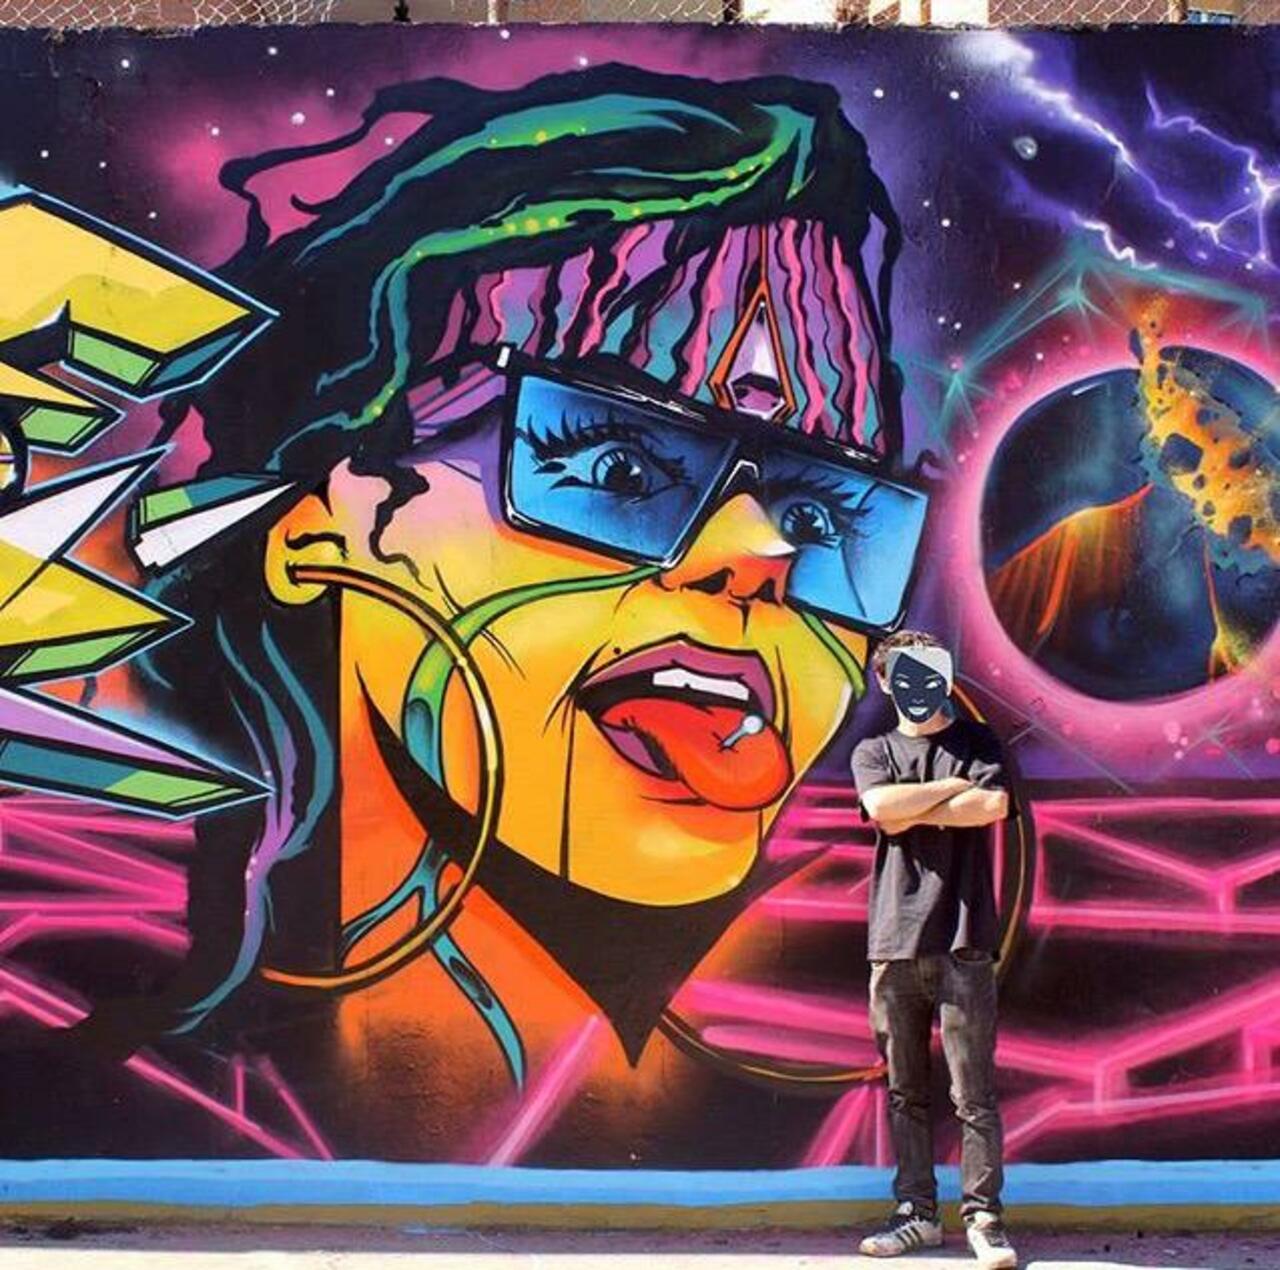 RT belilac "RT belilac "Brilliant new Street Art by the artist Jaycaes

#art #graffiti #mural #streetart http://t.co/0lwBYvZRpX""